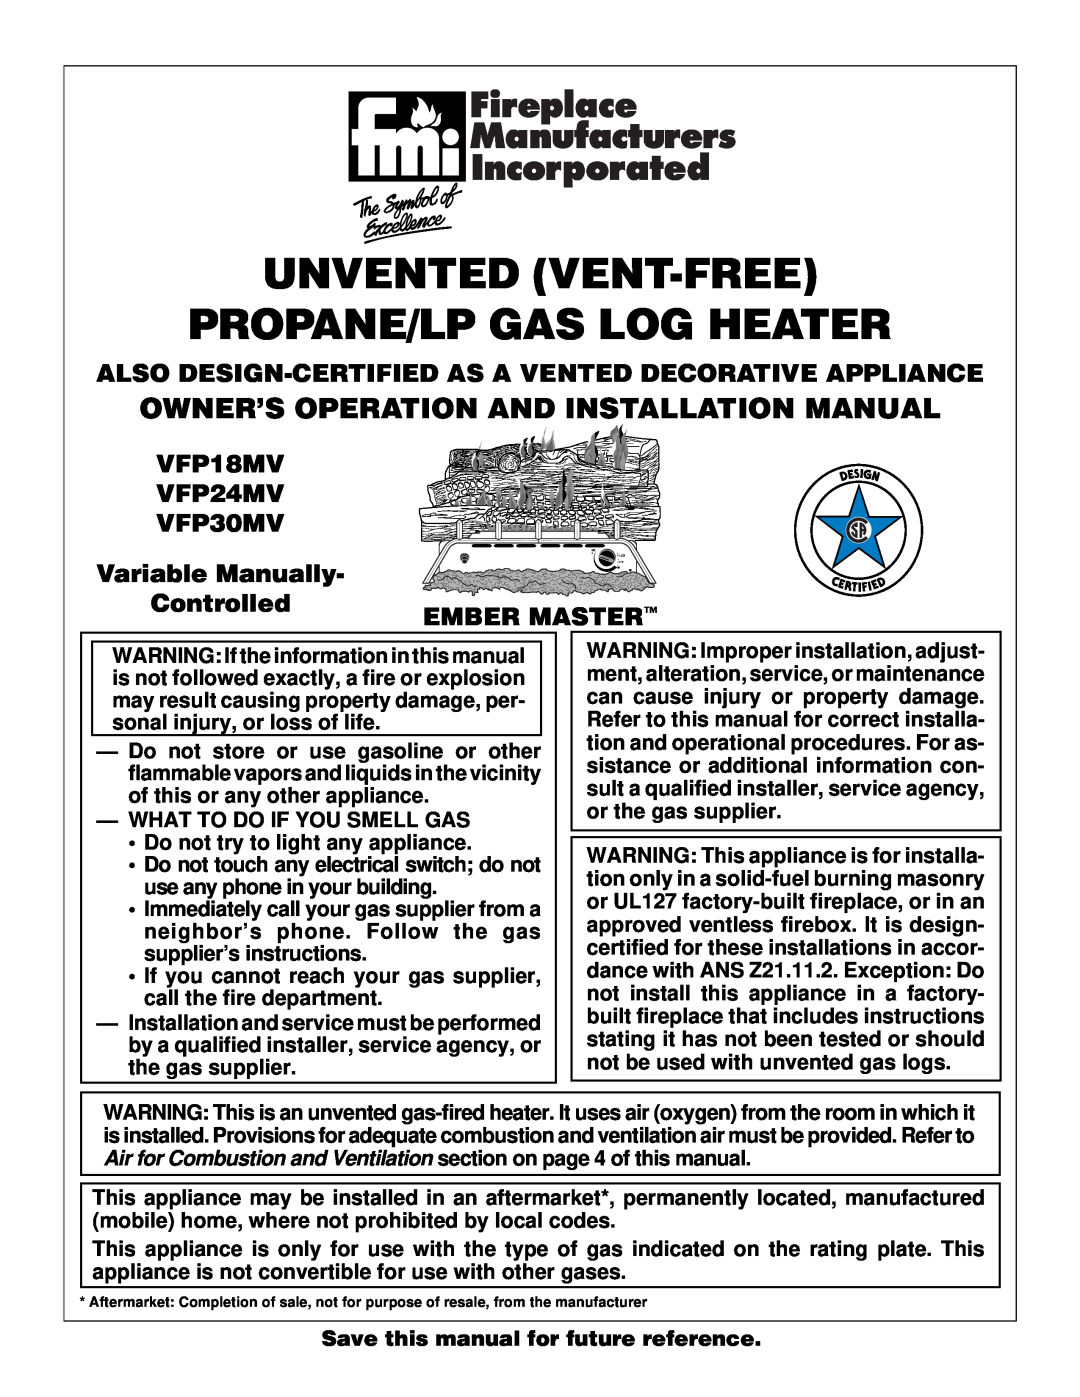 Desa VFP24MV installation manual Owner’S Operation And Installation Manual, Unvented Vent-Free Propane/Lp Gas Log Heater 